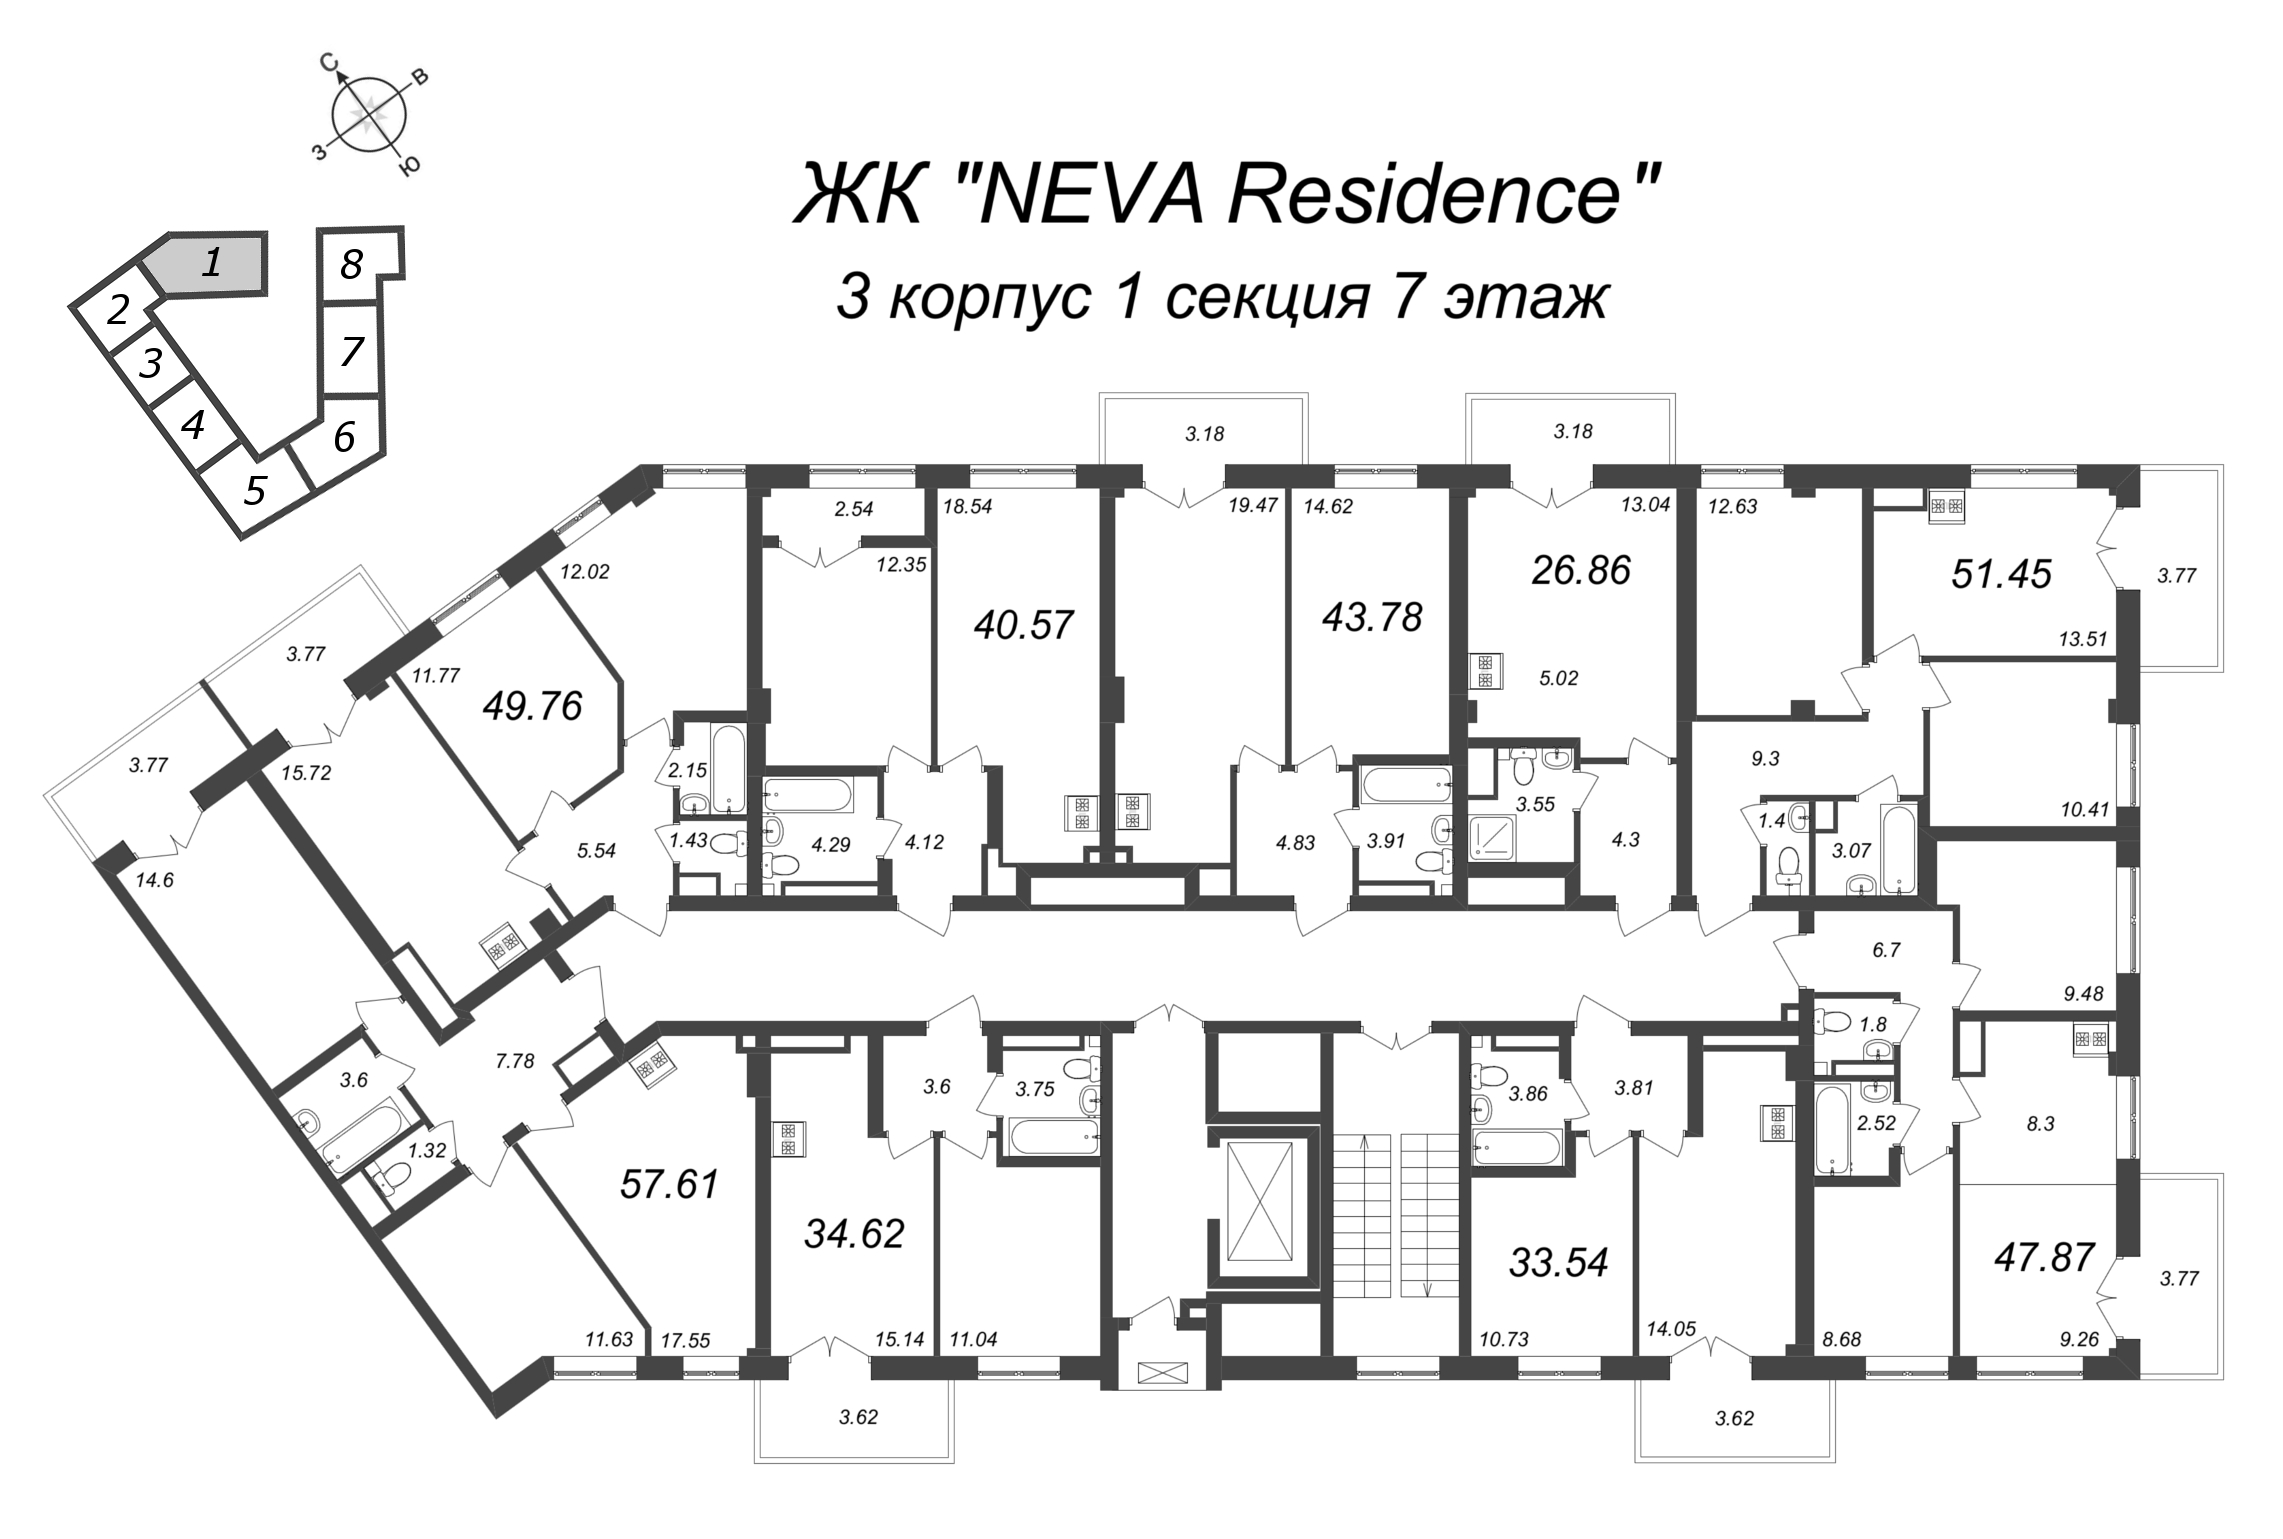 3-комнатная (Евро) квартира, 47.87 м² - планировка этажа